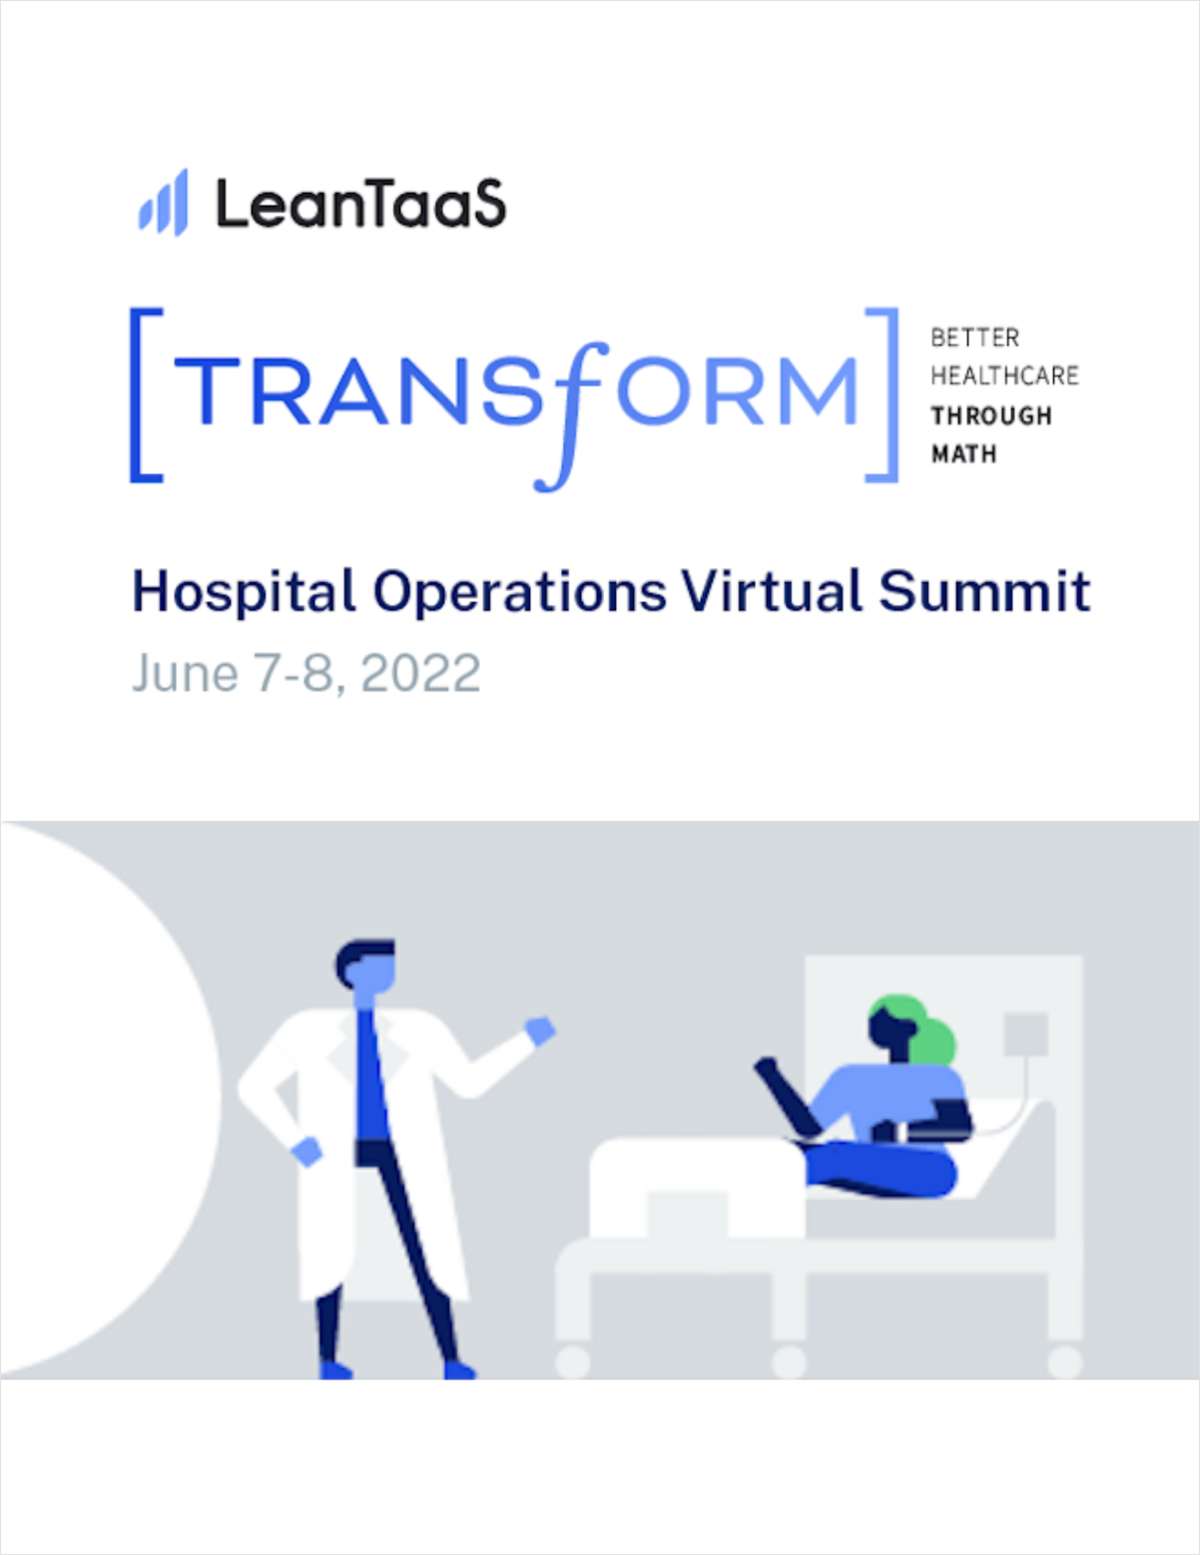 Transform Hospital Operations Virtual Summit